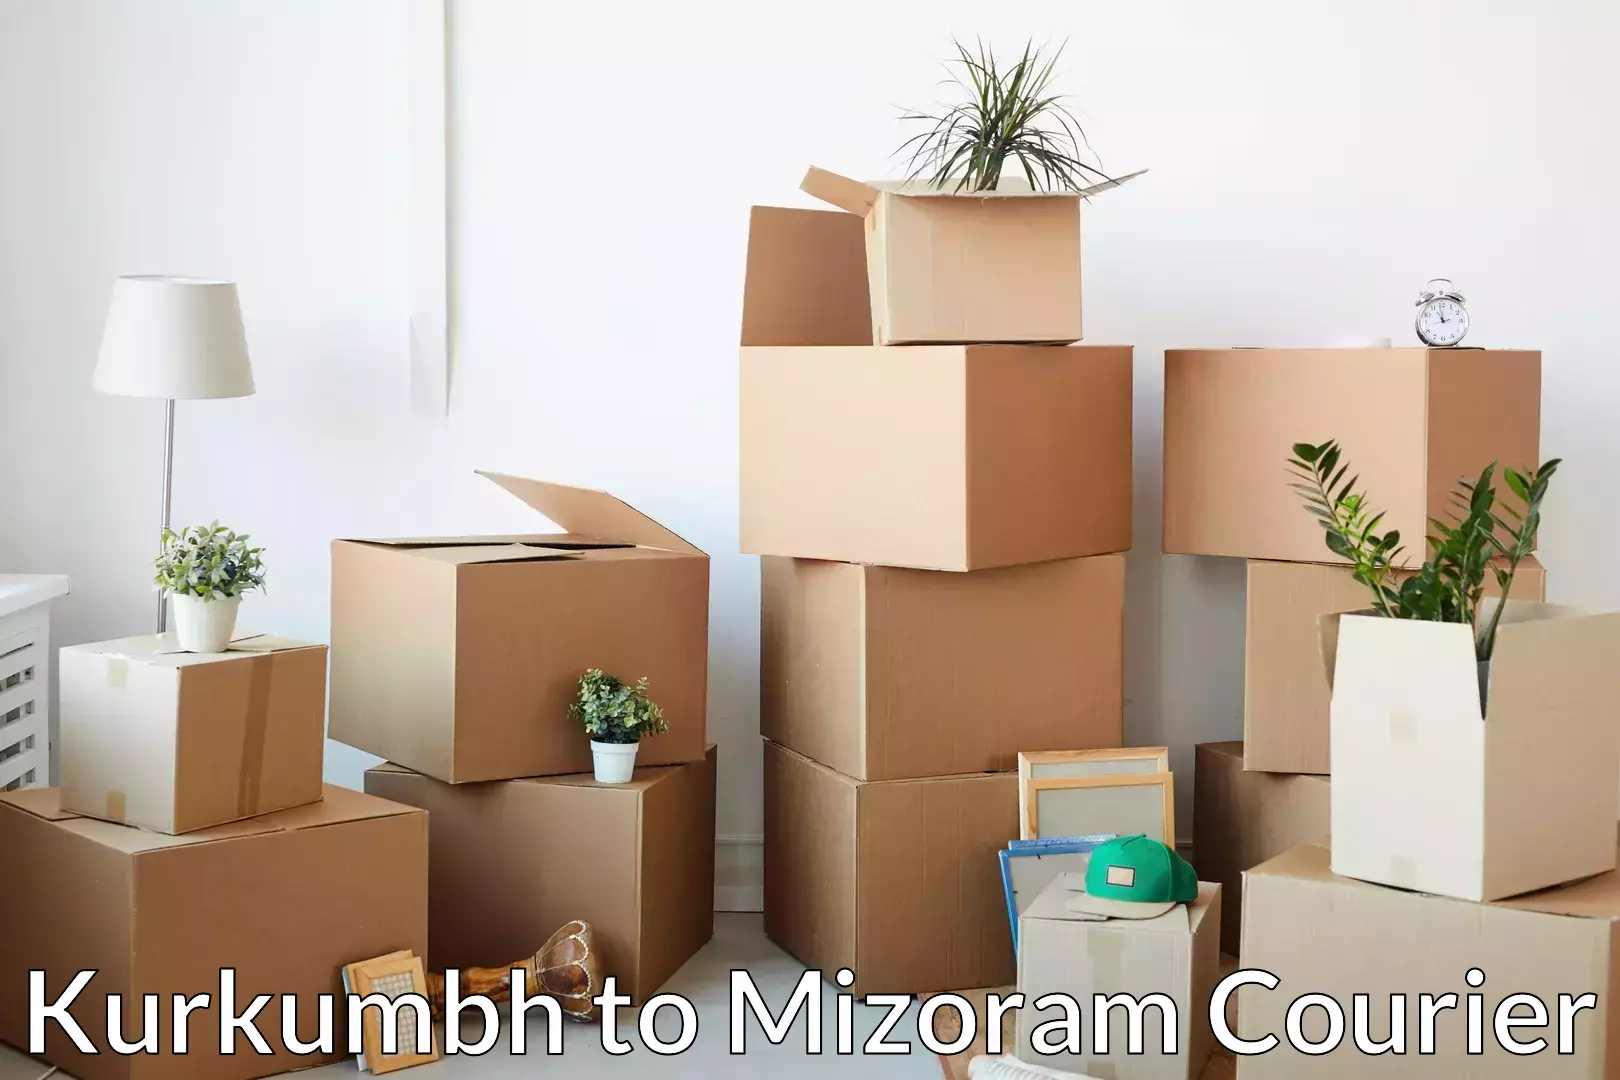 Reliable moving assistance in Kurkumbh to Mizoram